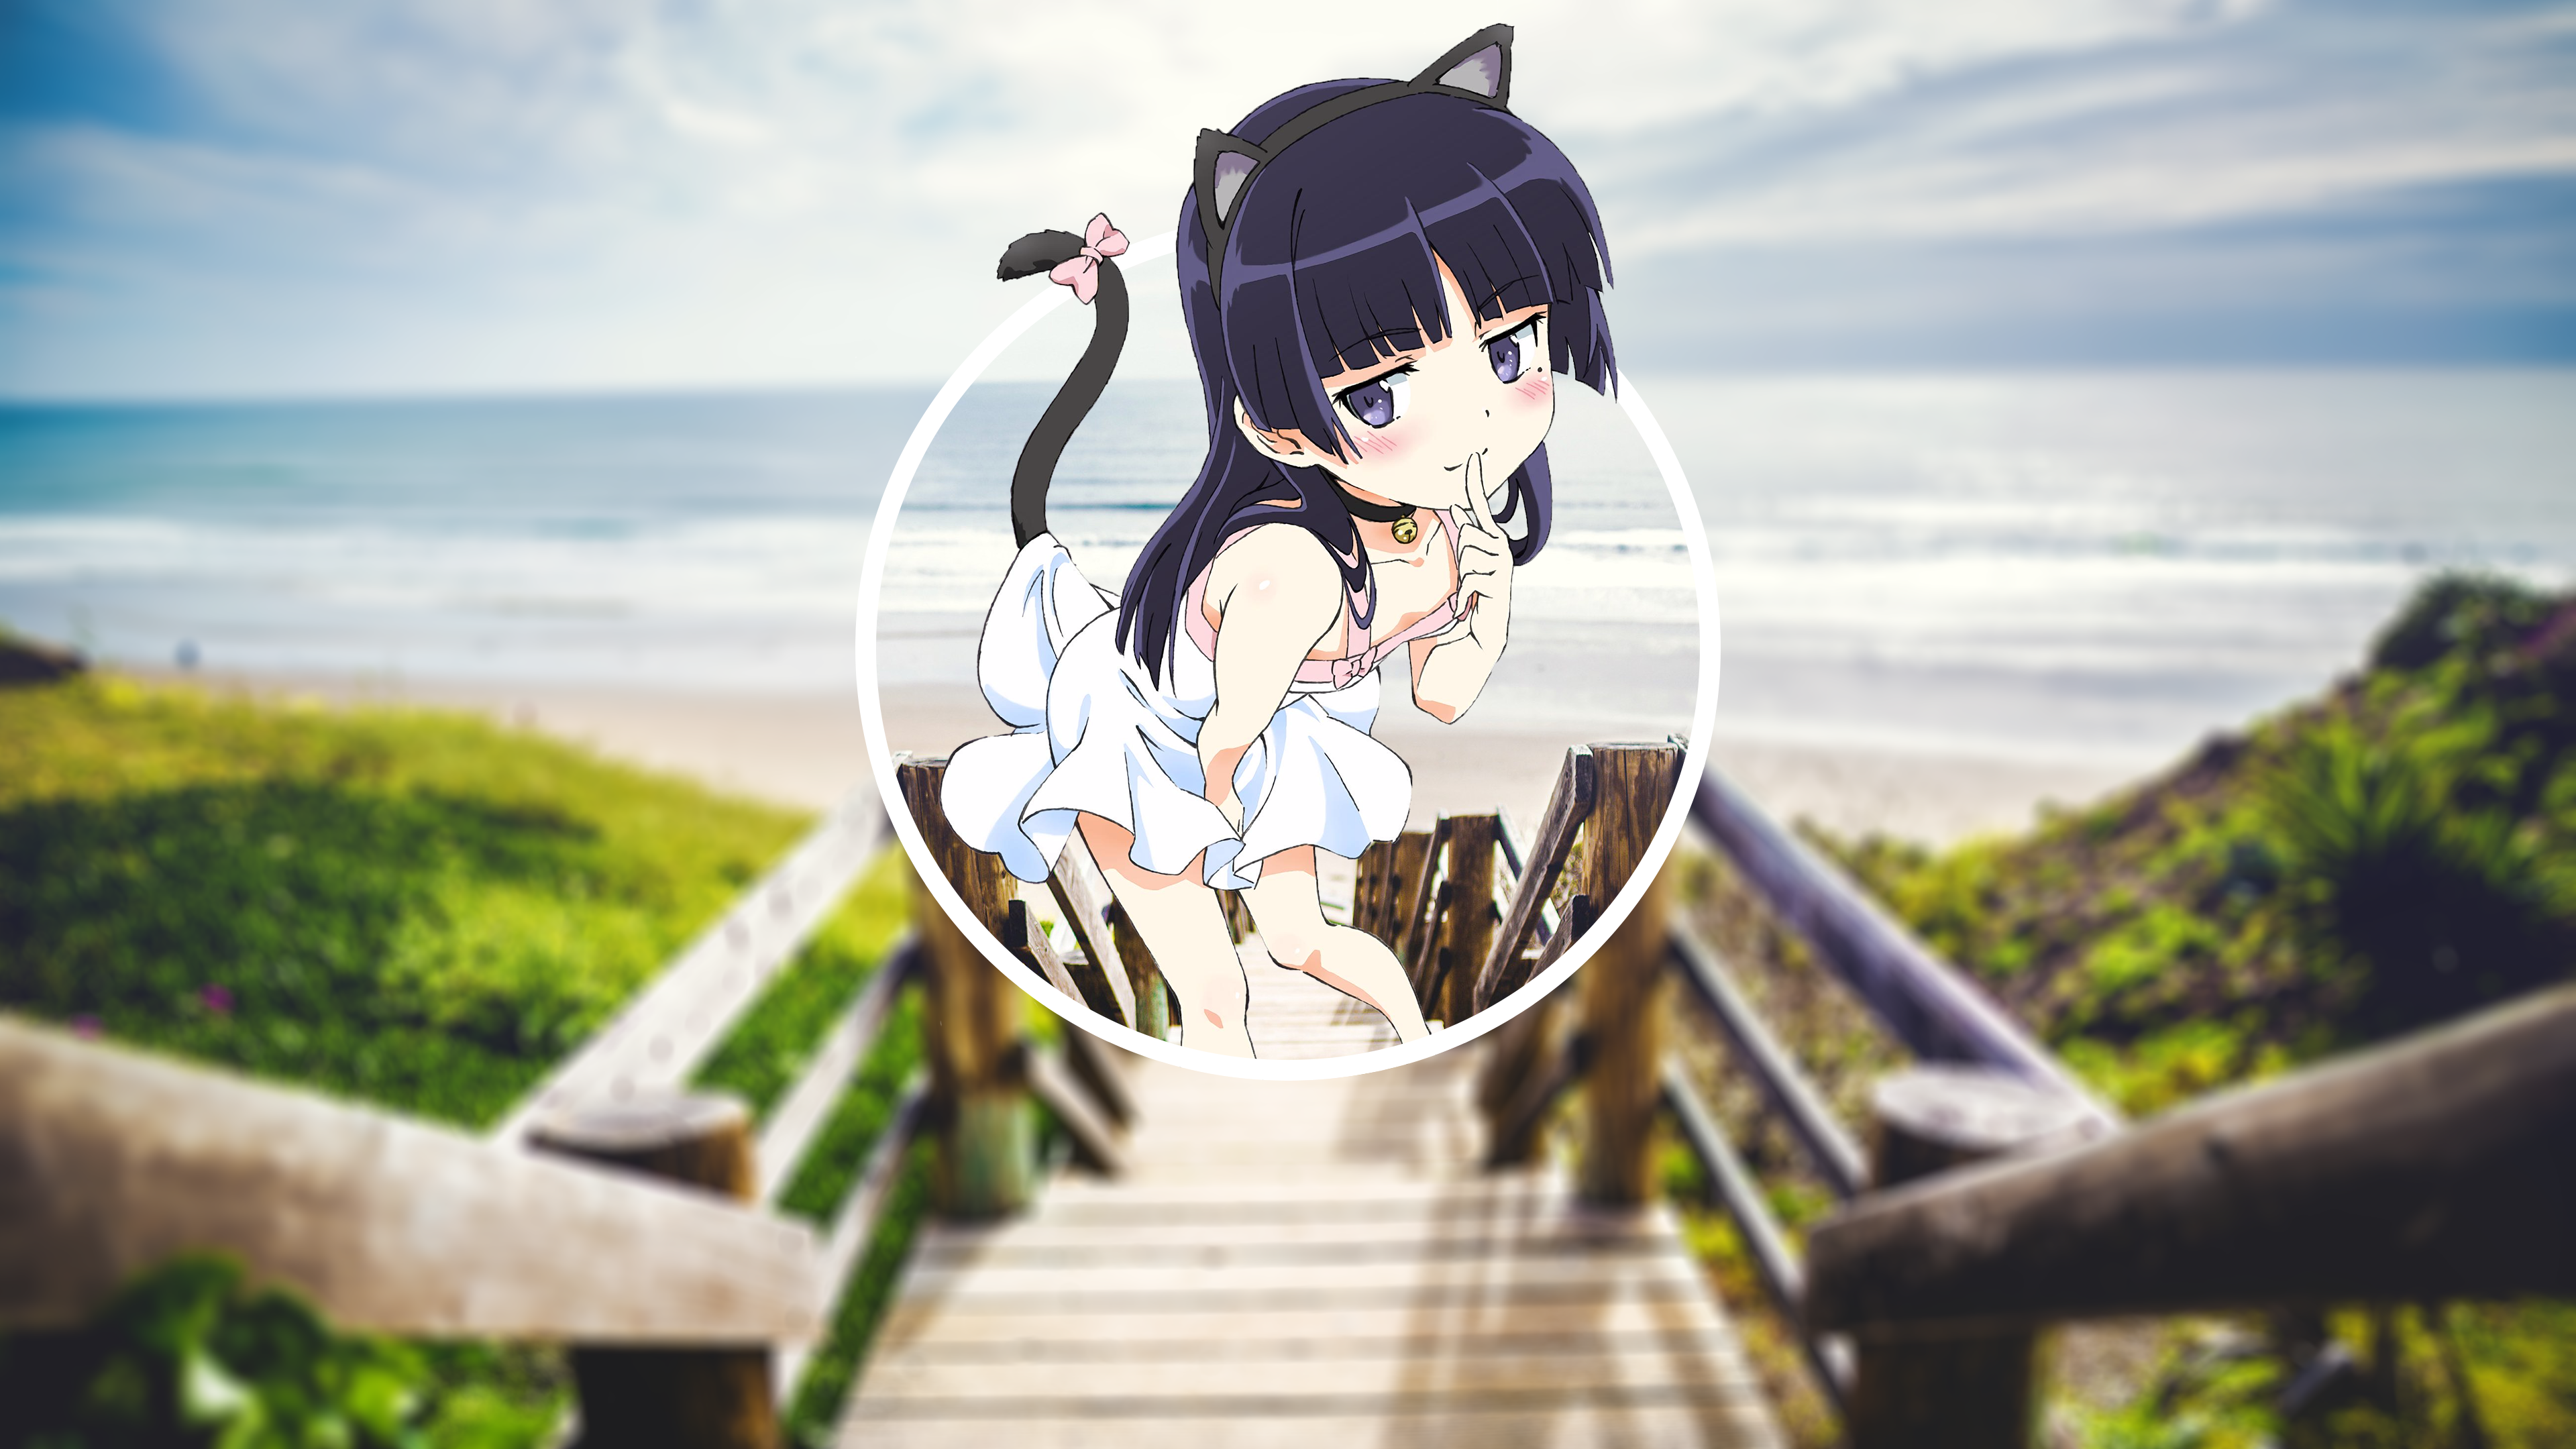 Anime 3840x2160 landscape anime girls Gokou Ruri picture-in-picture beach dark hair cat girl white dress anime blurred pale brunette Ore no Imouto ga Konnani Kawaii Wake ga Nai